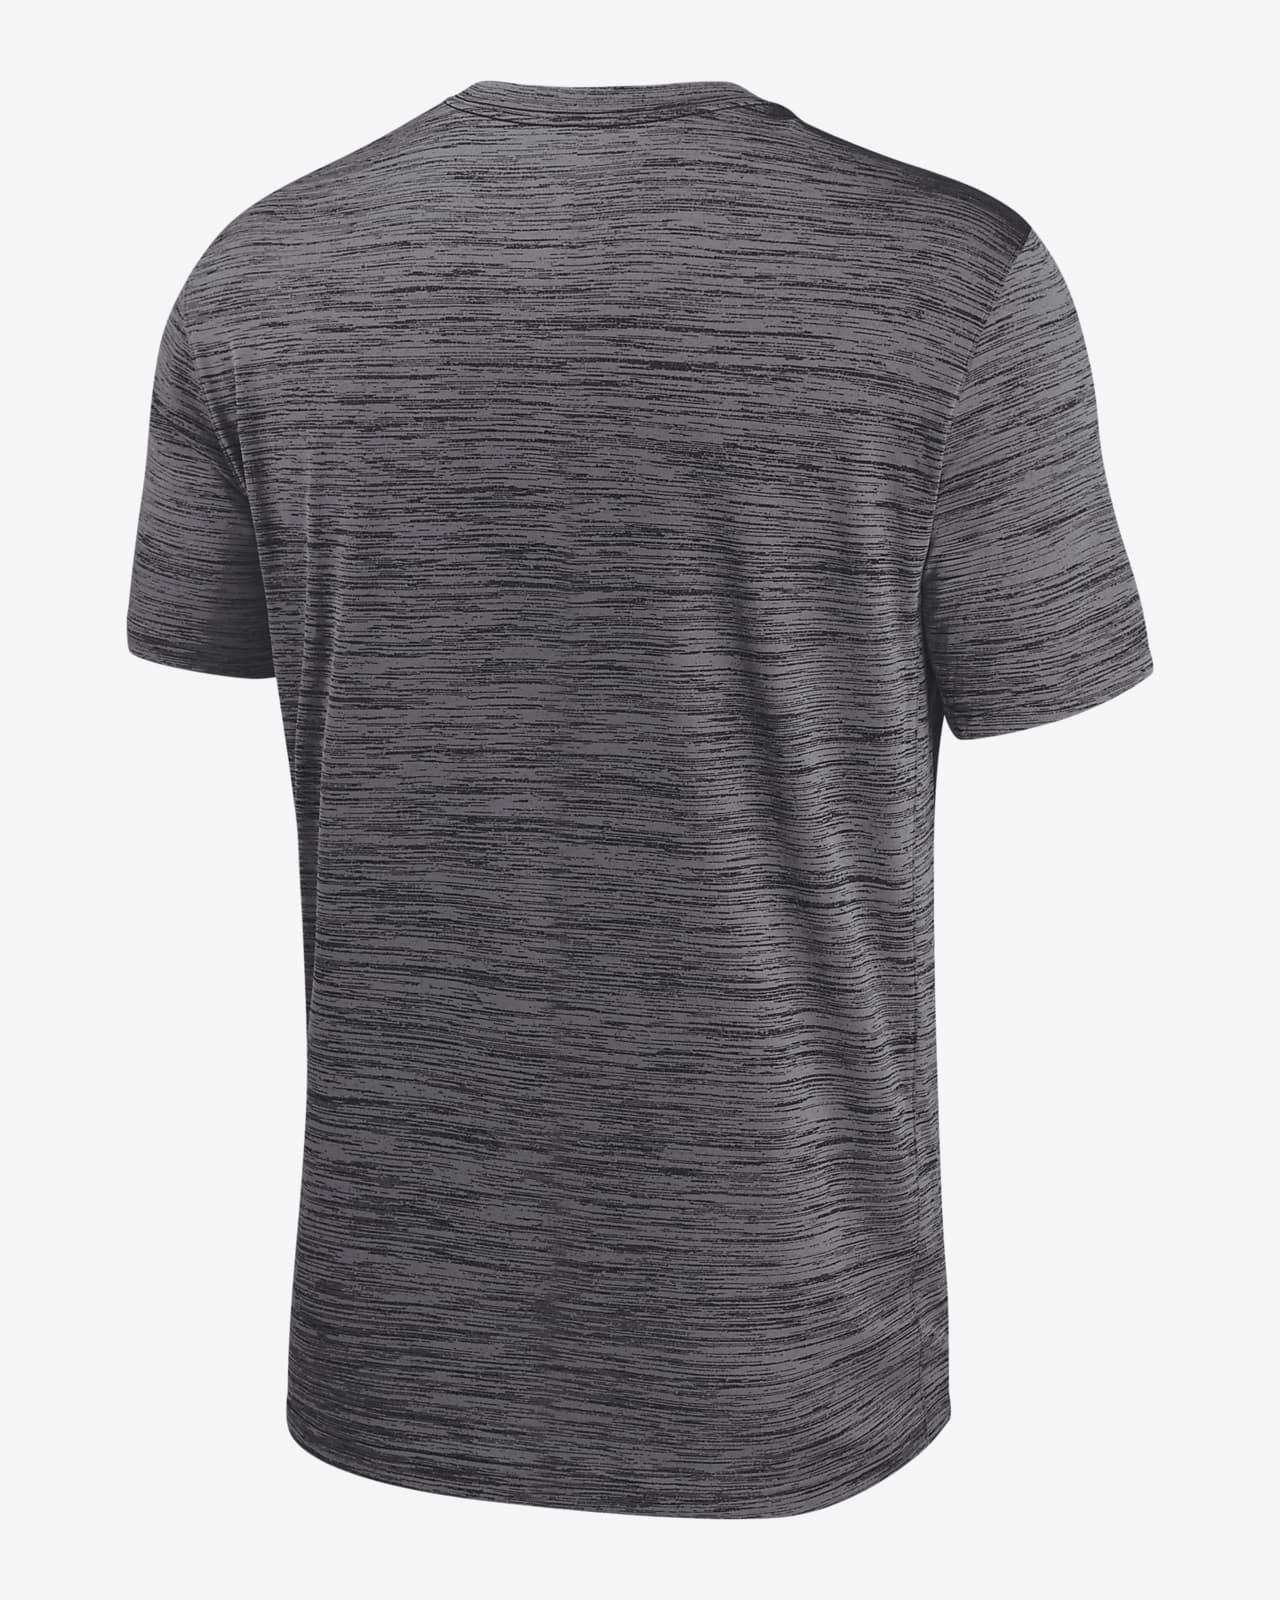 BoredWalk Men's Pittsburgh 412 Area Code T-Shirt, Select A Size / Navy